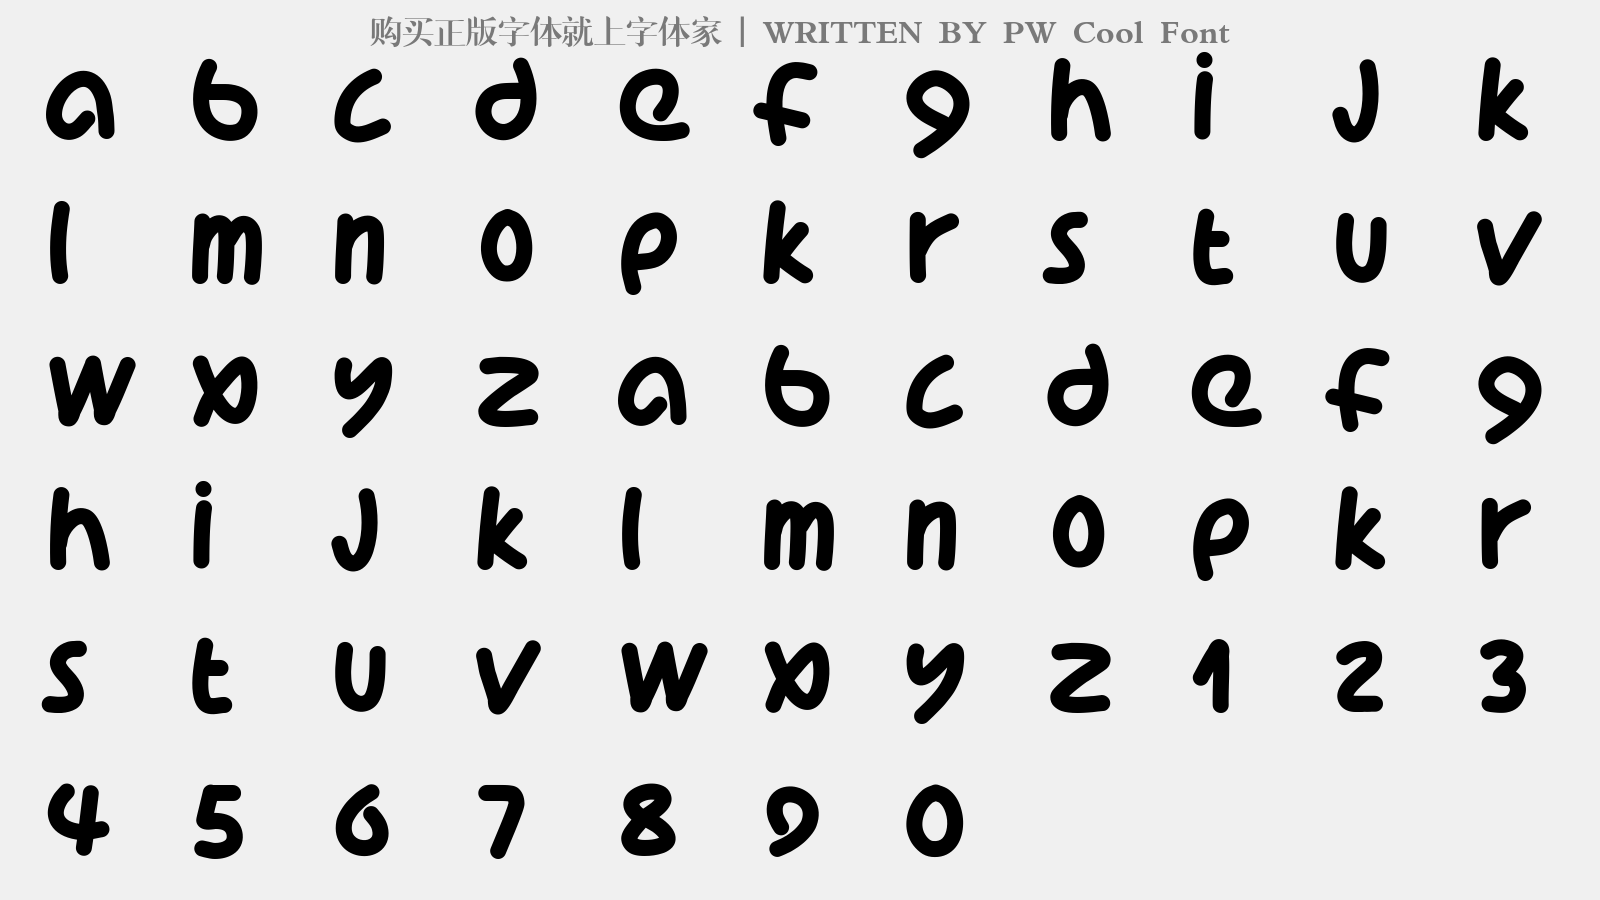 PW Cool Font - 大写字母/小写字母/数字